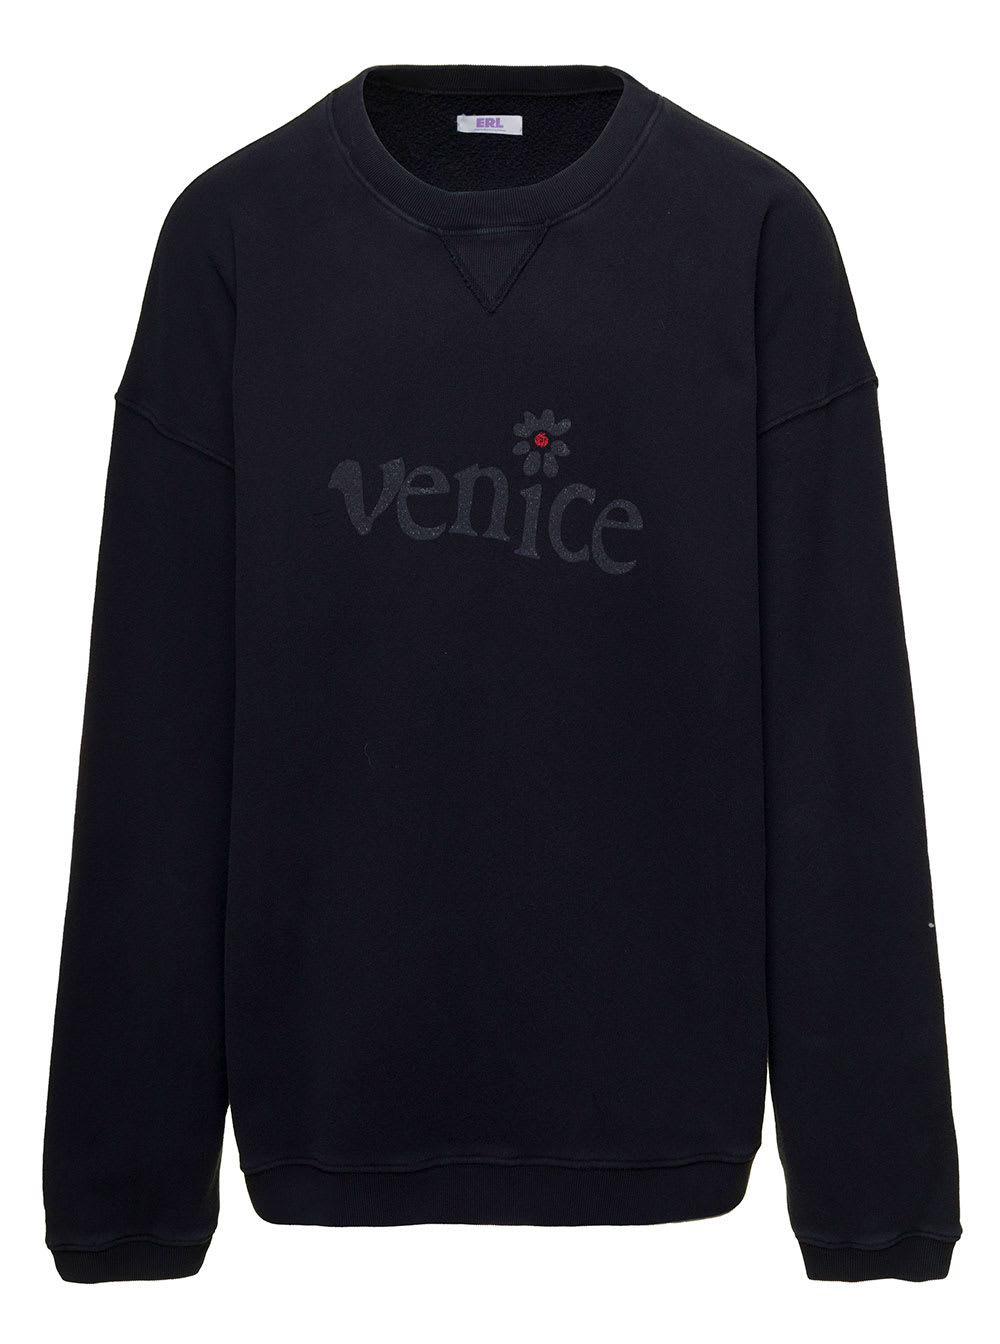 Blsck Crewneck Sweatshirt With Venice Print In Cotton